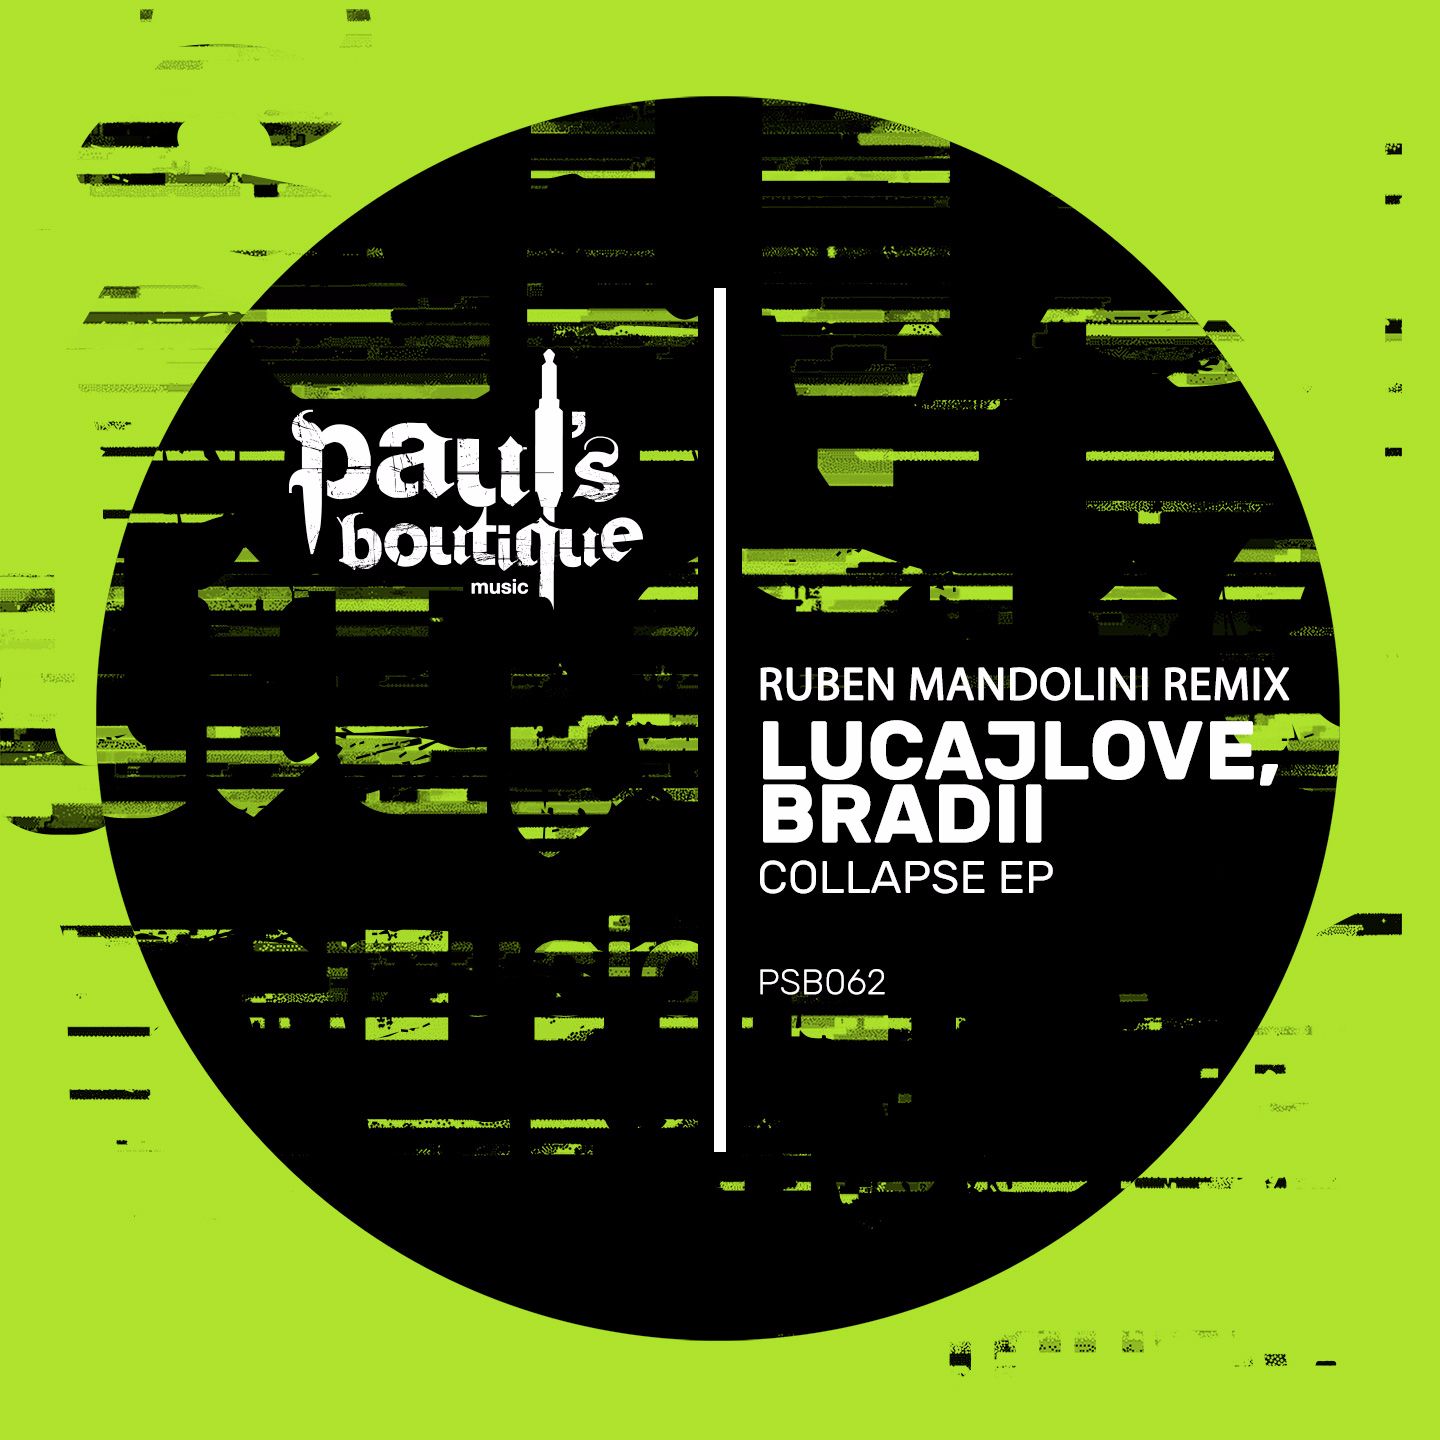 I-download LucaJLove, Bradii - Who Really Knows (Ruben Mandolini Remix)  [Paul's Boutique]